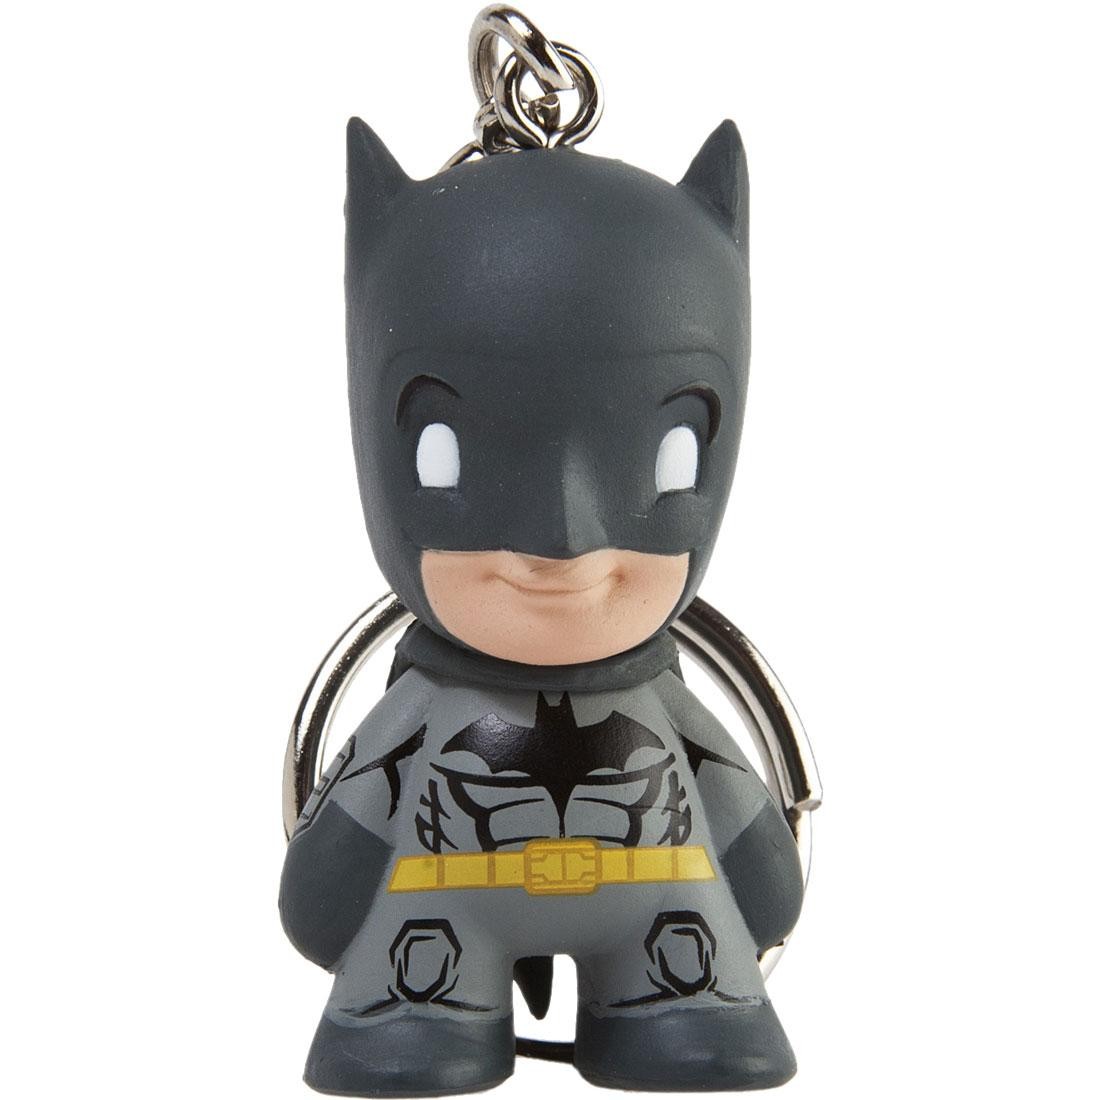 1.5" Figure Brand New Blister Pack DC Universe Keychain Bat Man Kidrobot 